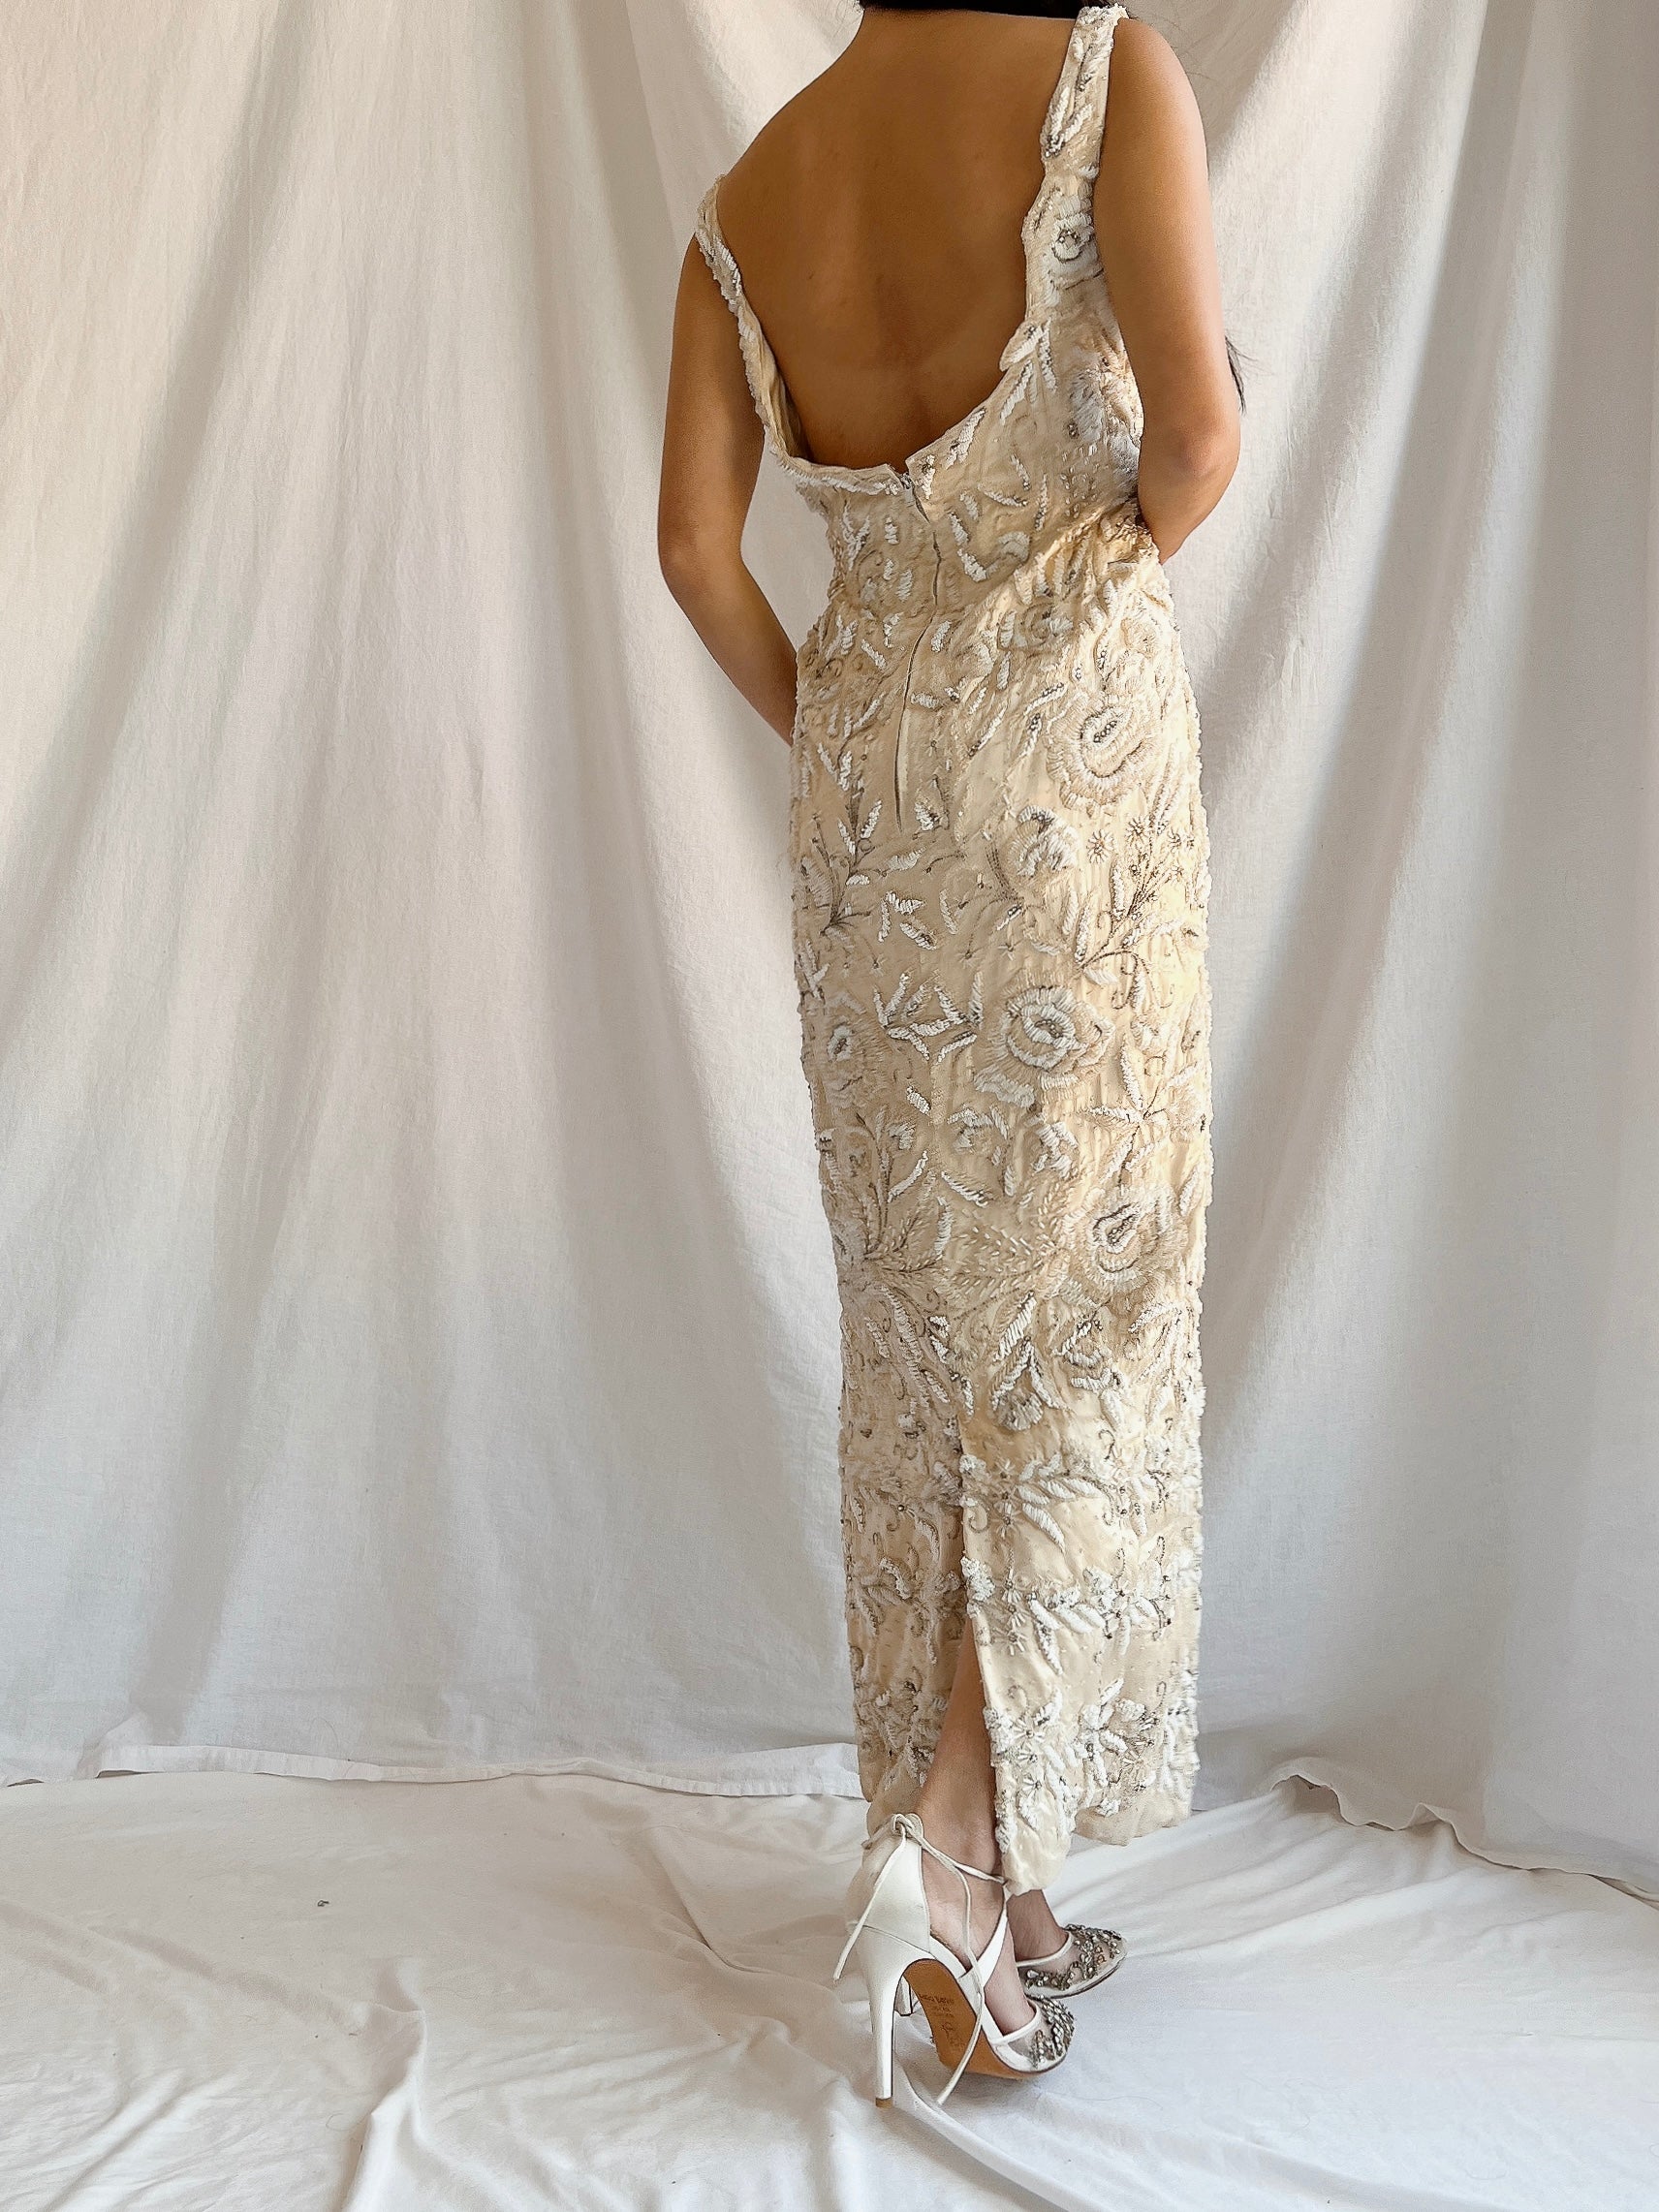 1960s Hand Beaded Ivory Dress - S/M